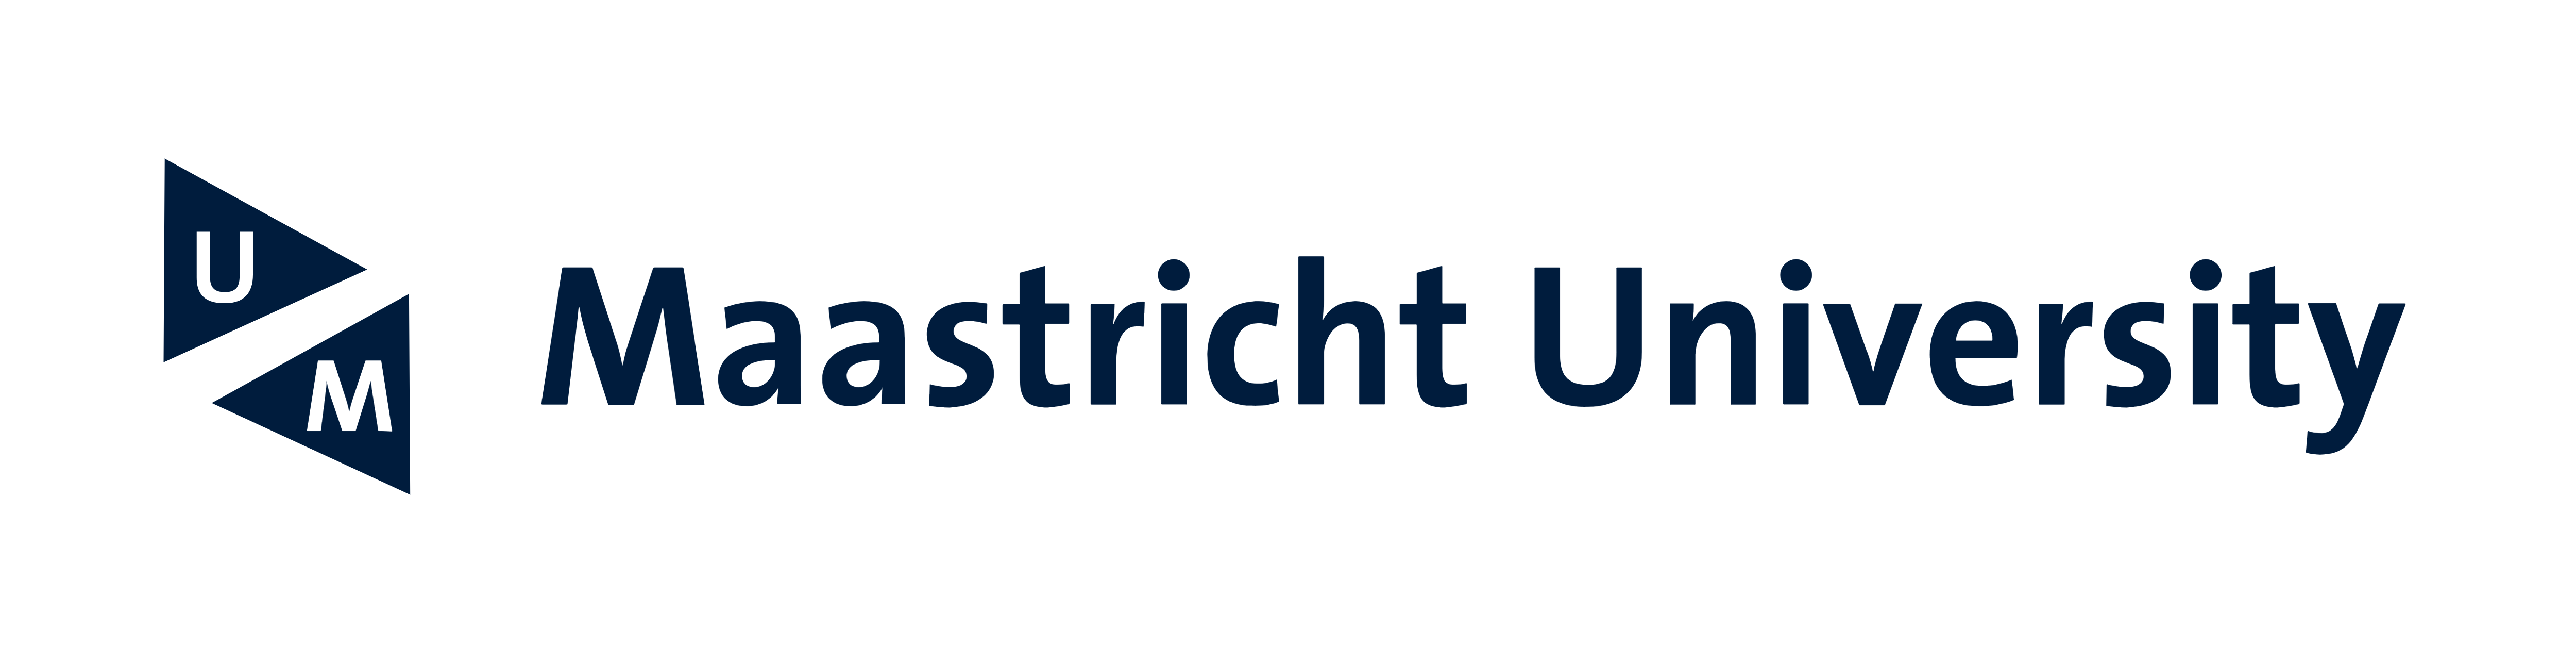 maastricht-university-logos-download